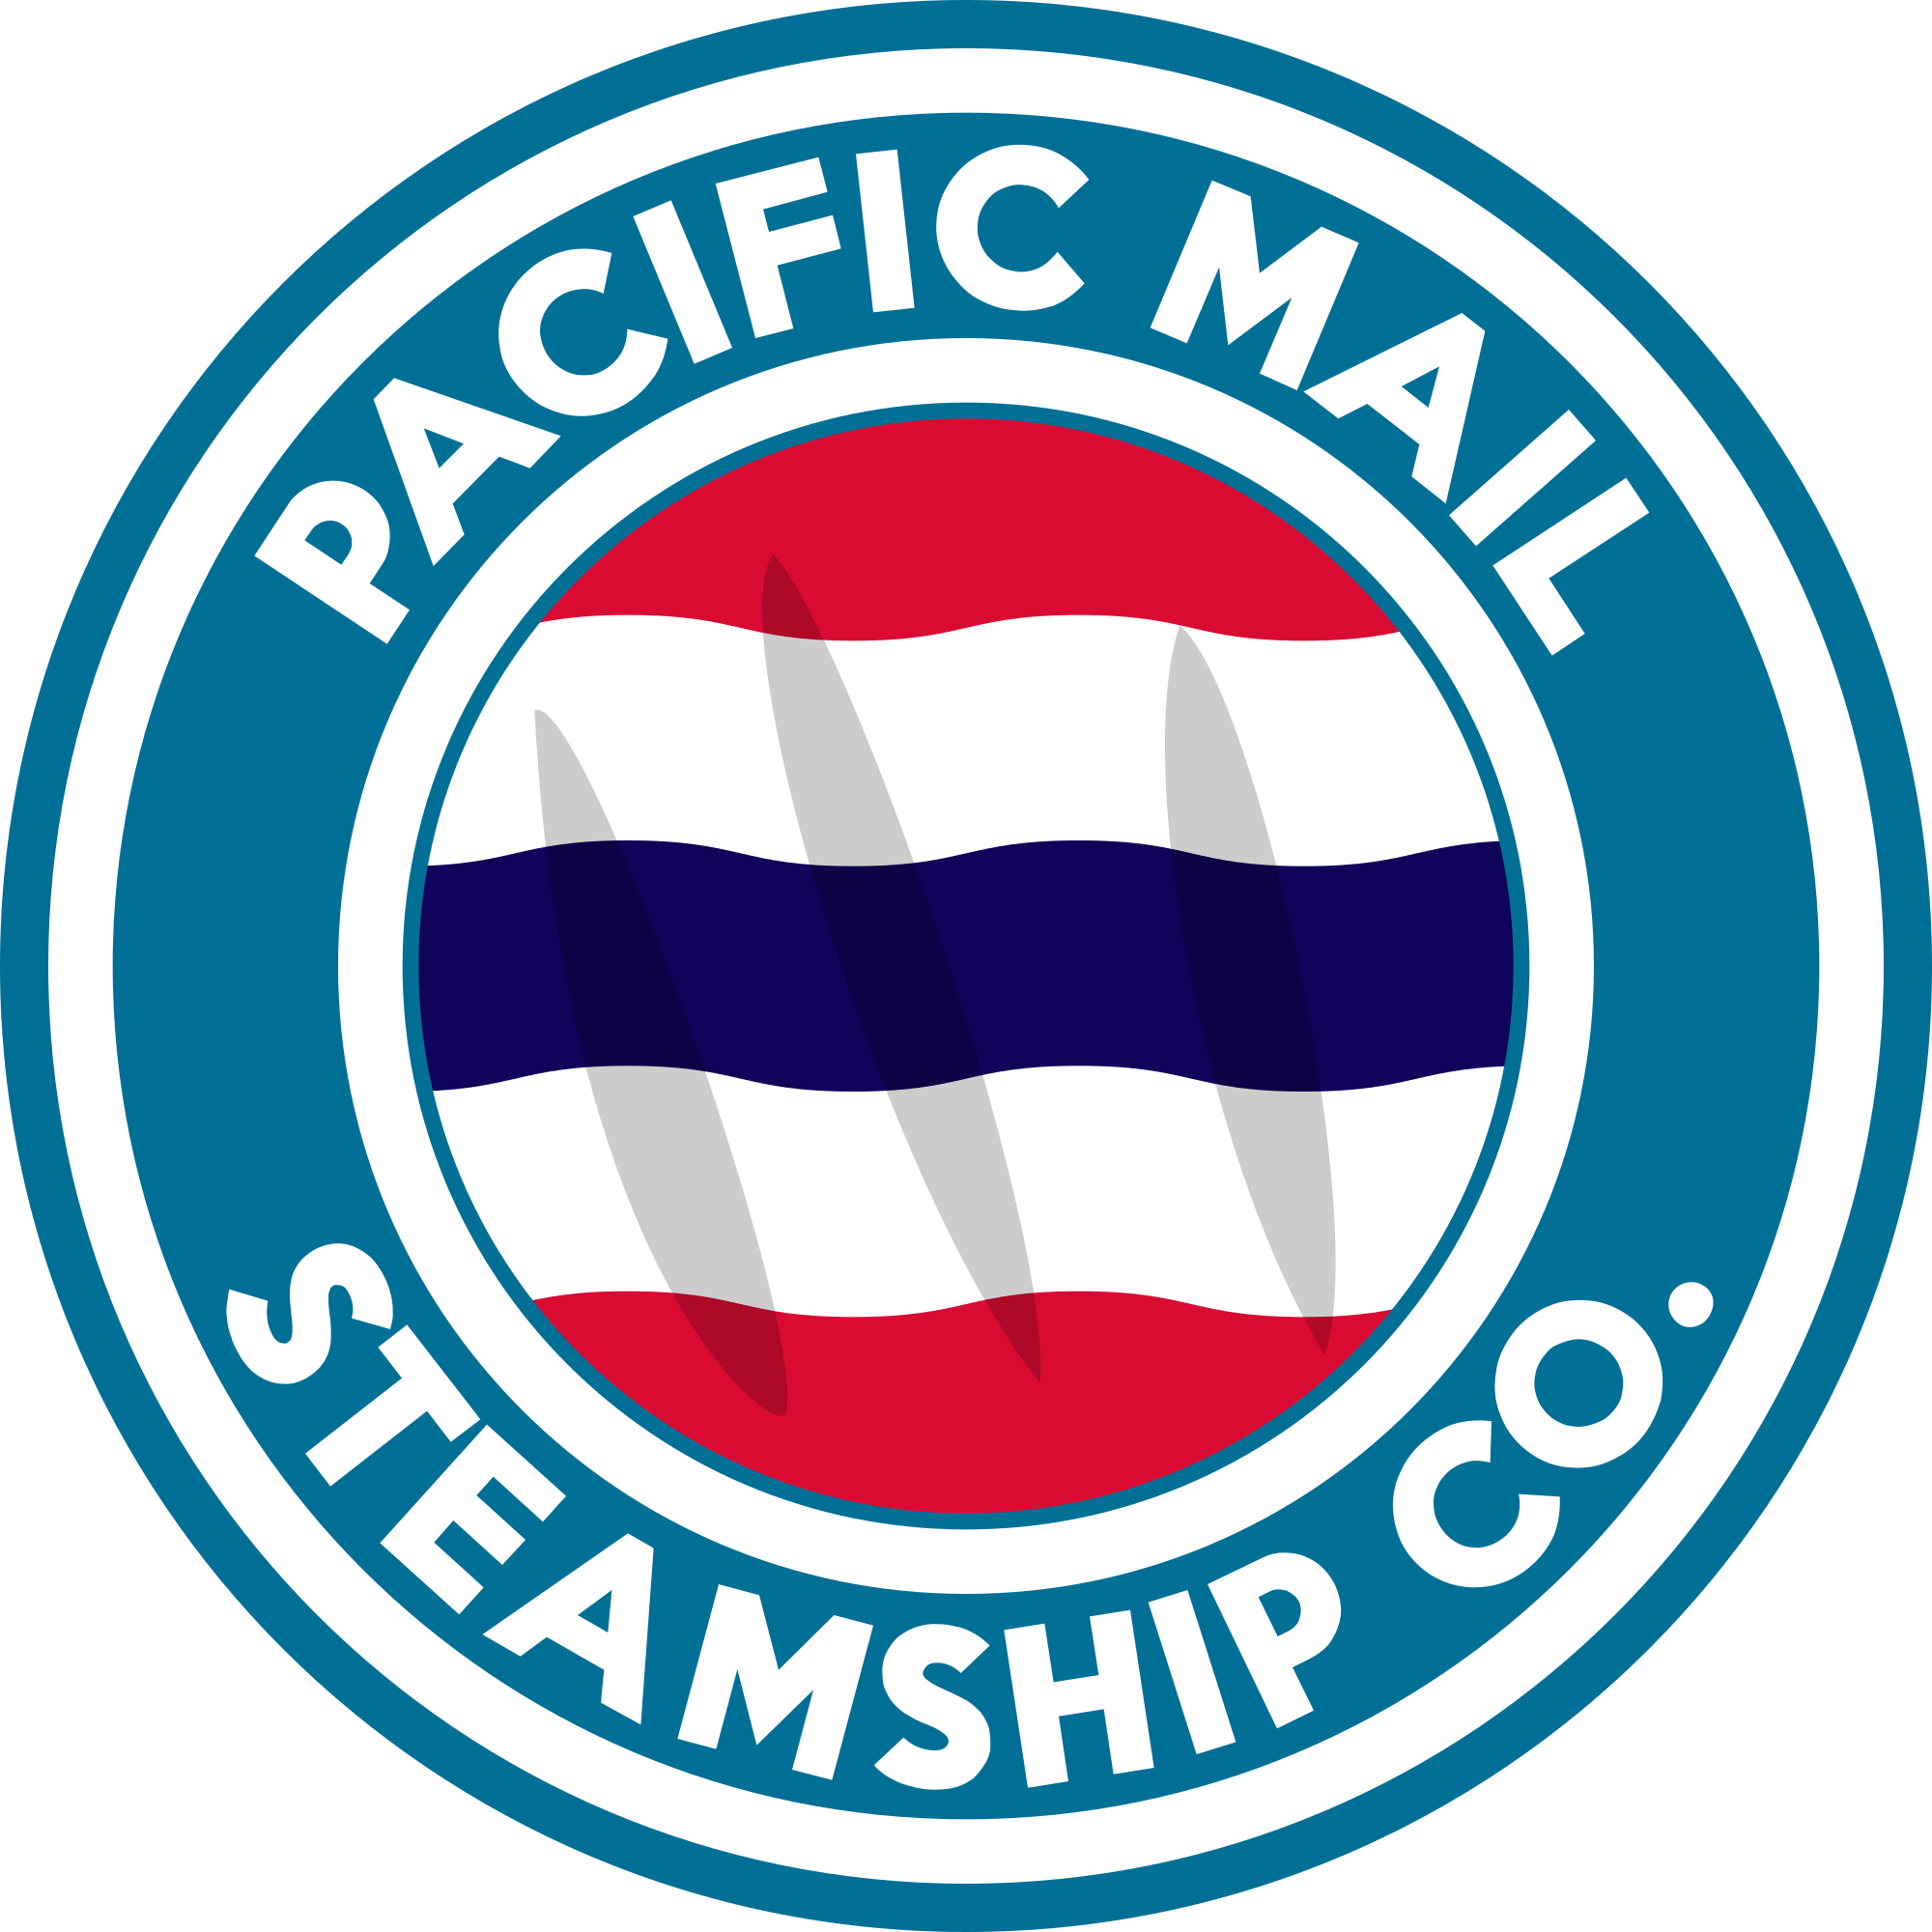 Mail Company Logo - Pacific Mail Steamship Company logo.svg